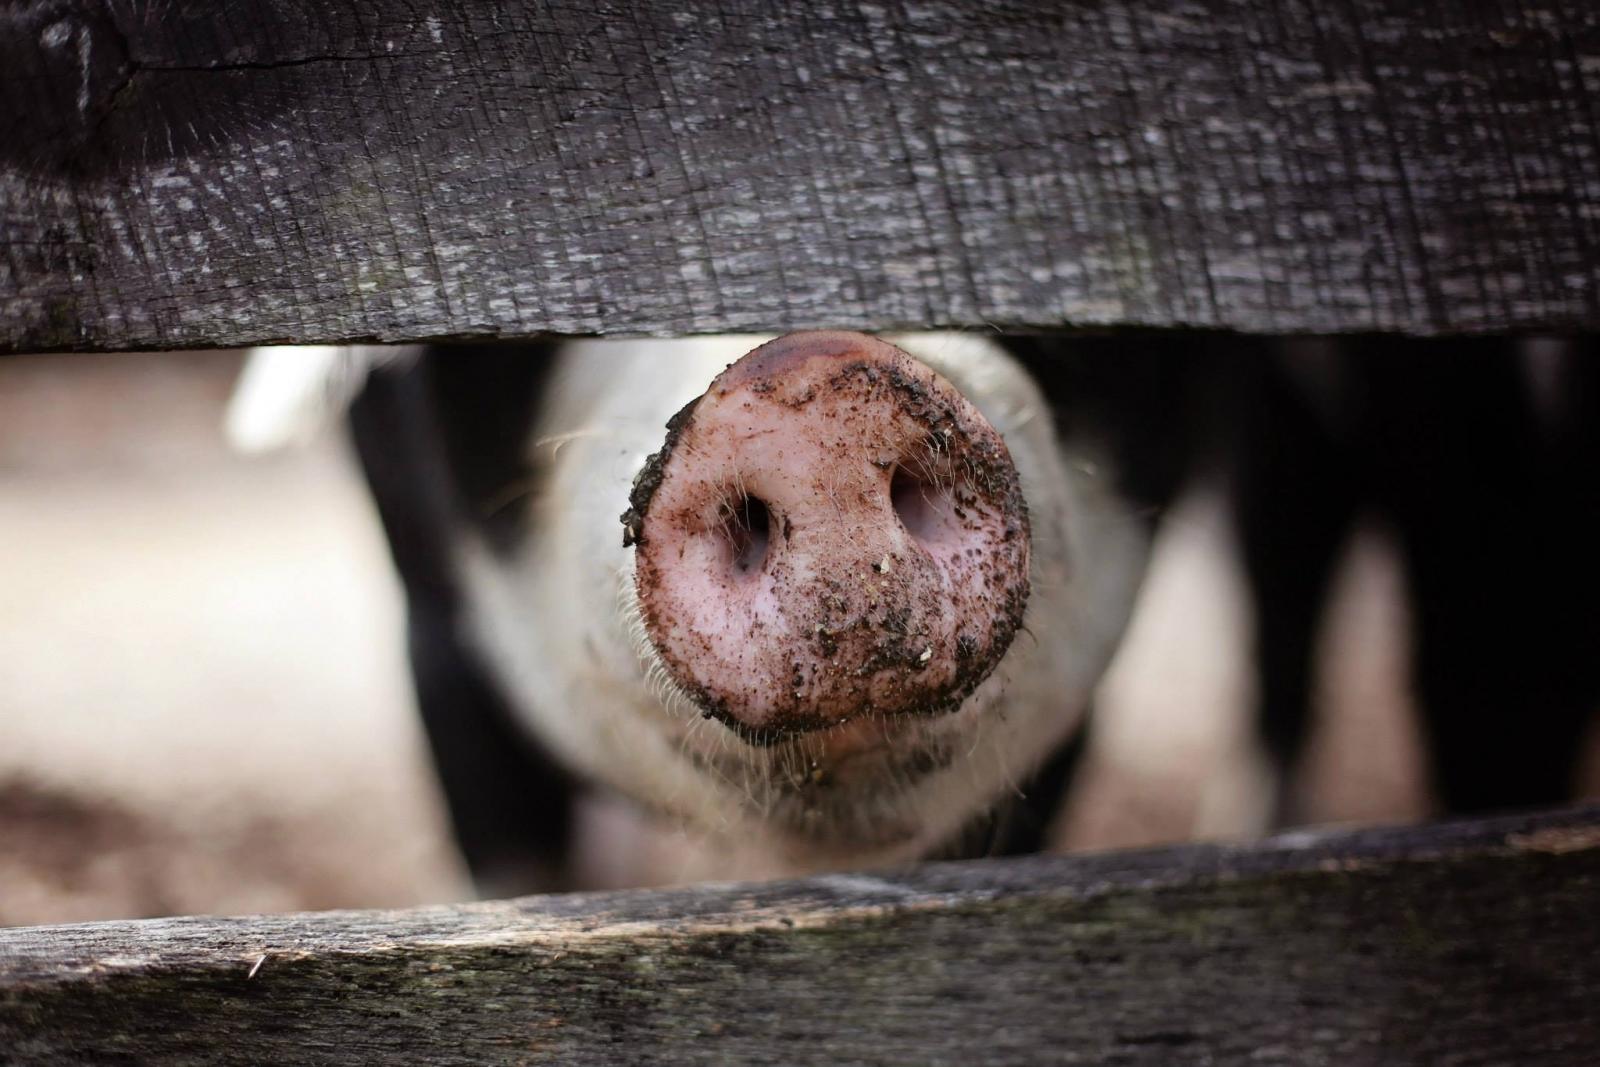 Pig in sty. Photo credit: Pexels